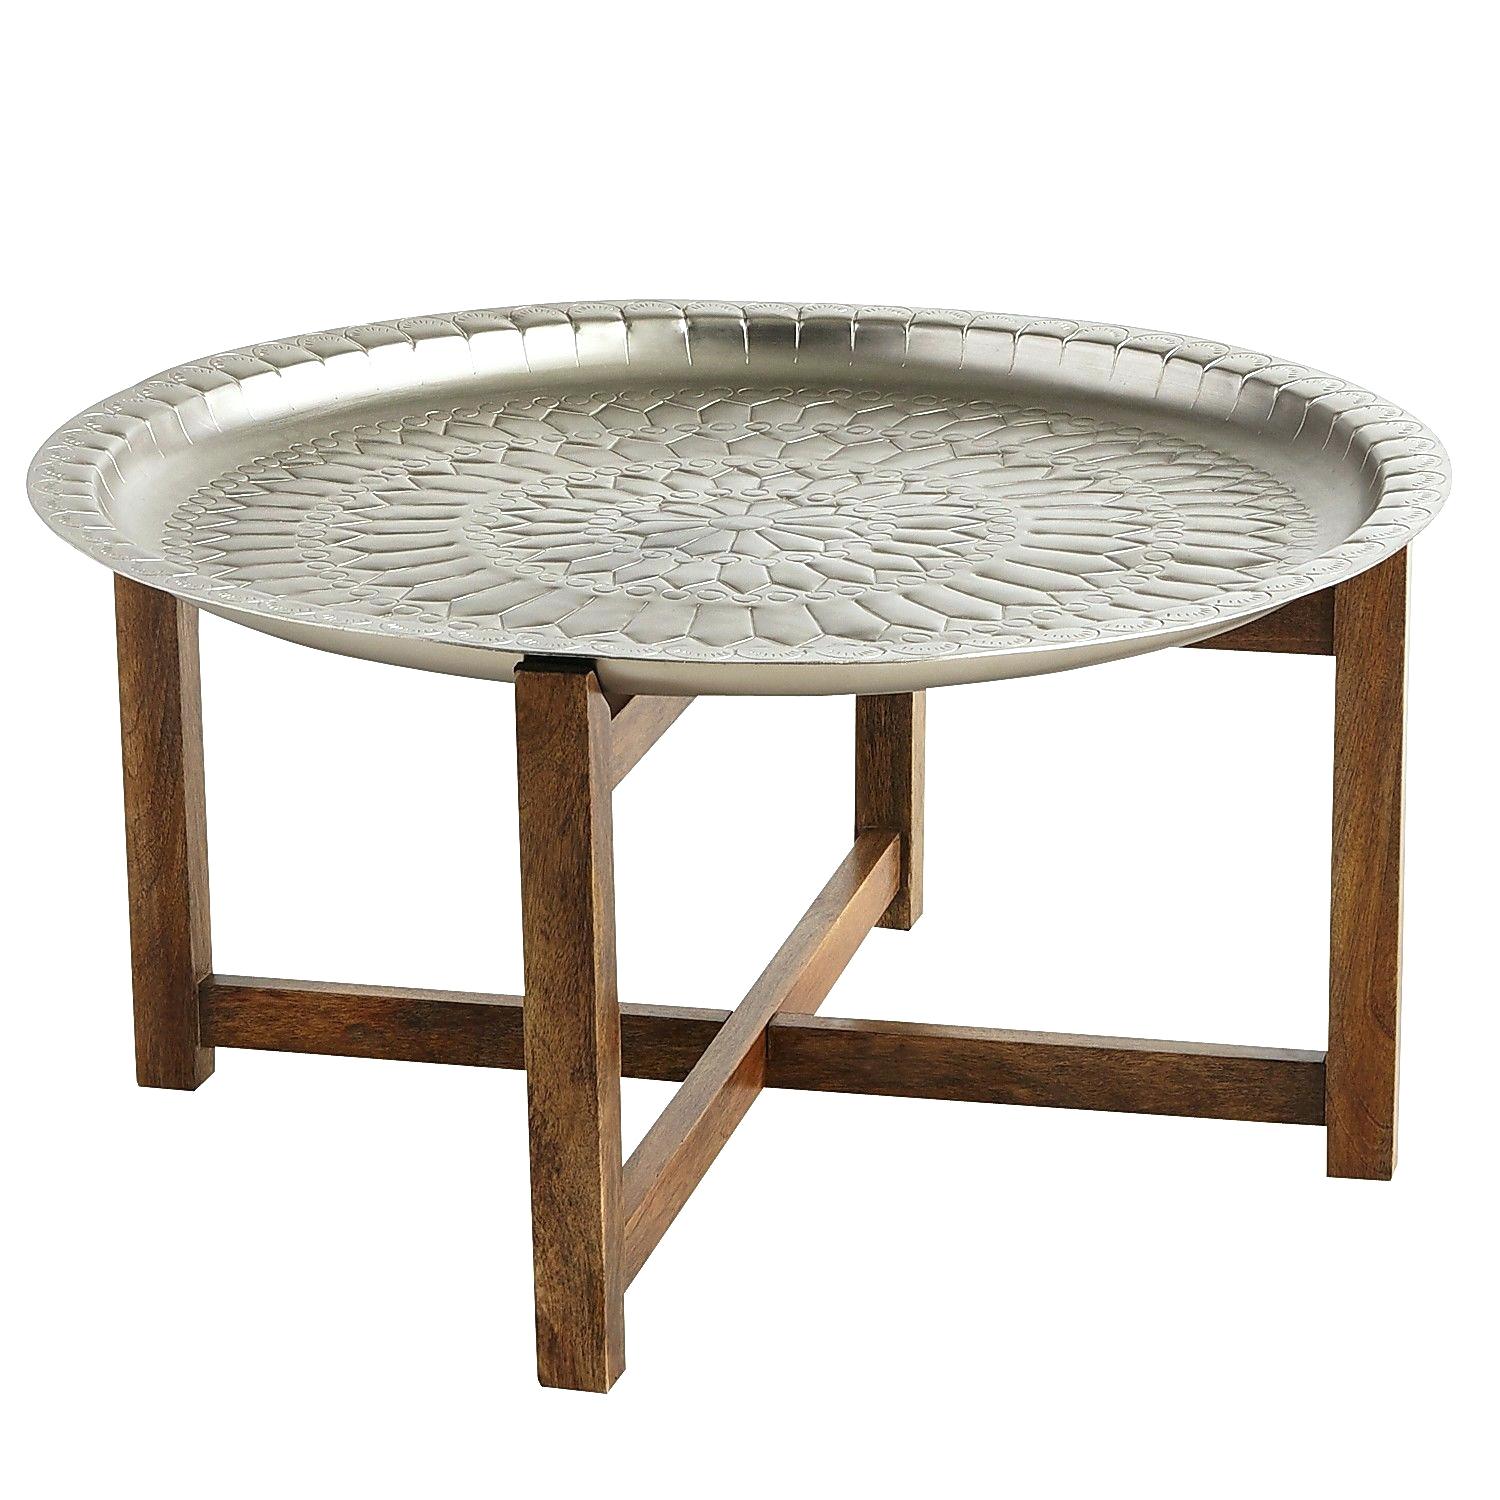 столик из круглого подноса